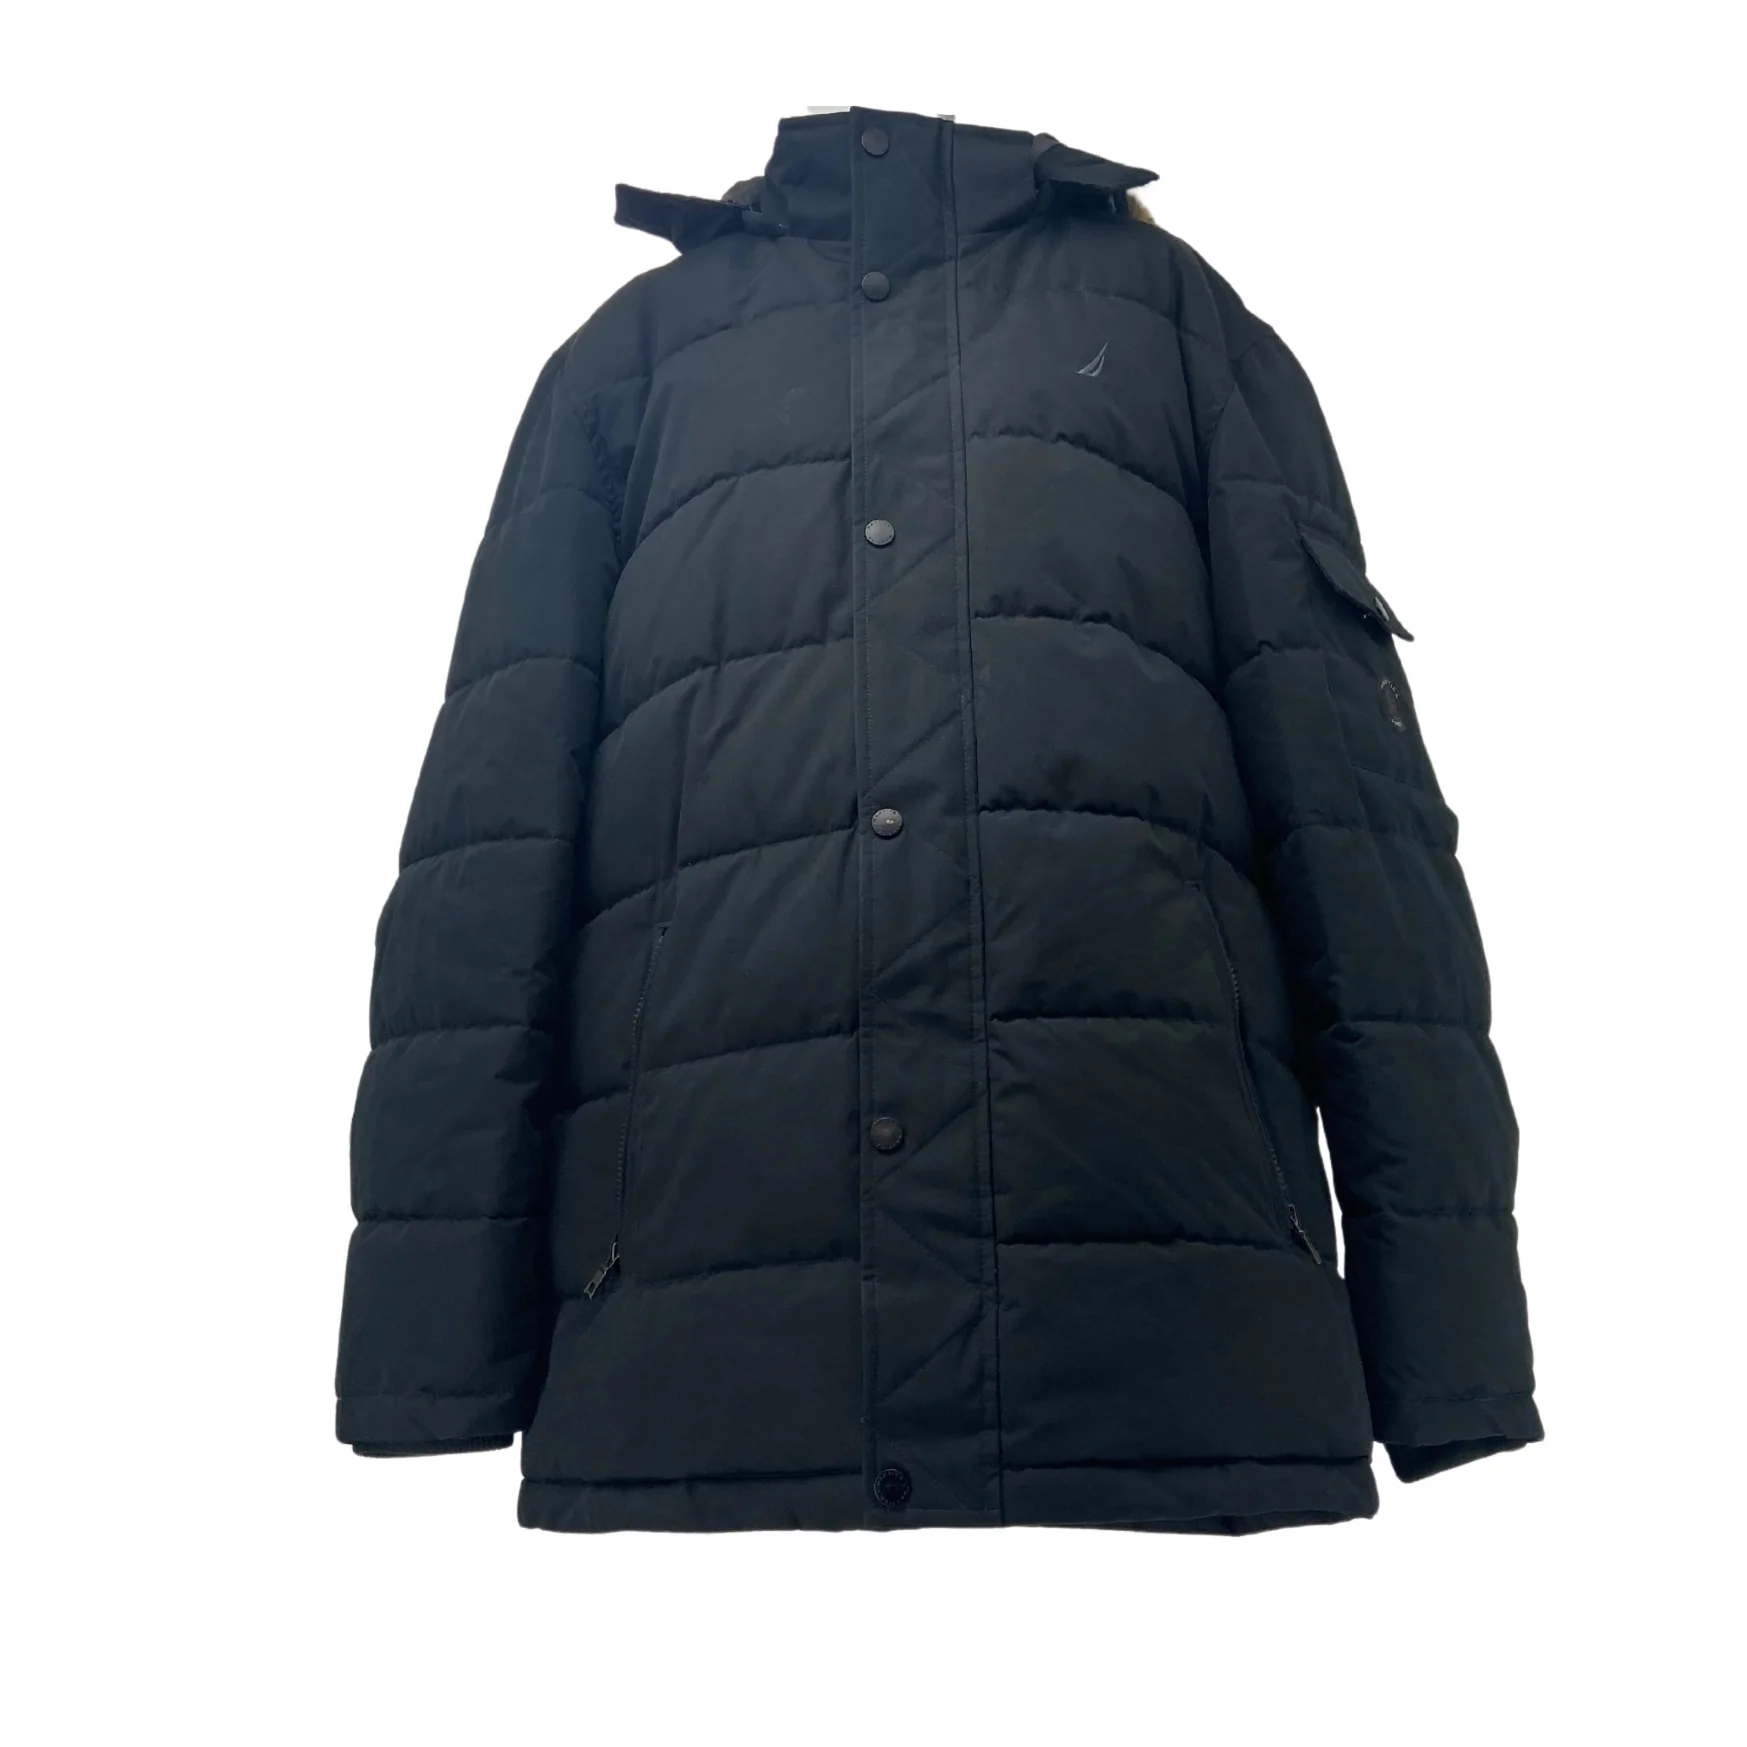 Nautica Men's Winter Jacket / Men's Winter Coat / Black / Faux Fur / Size Medium